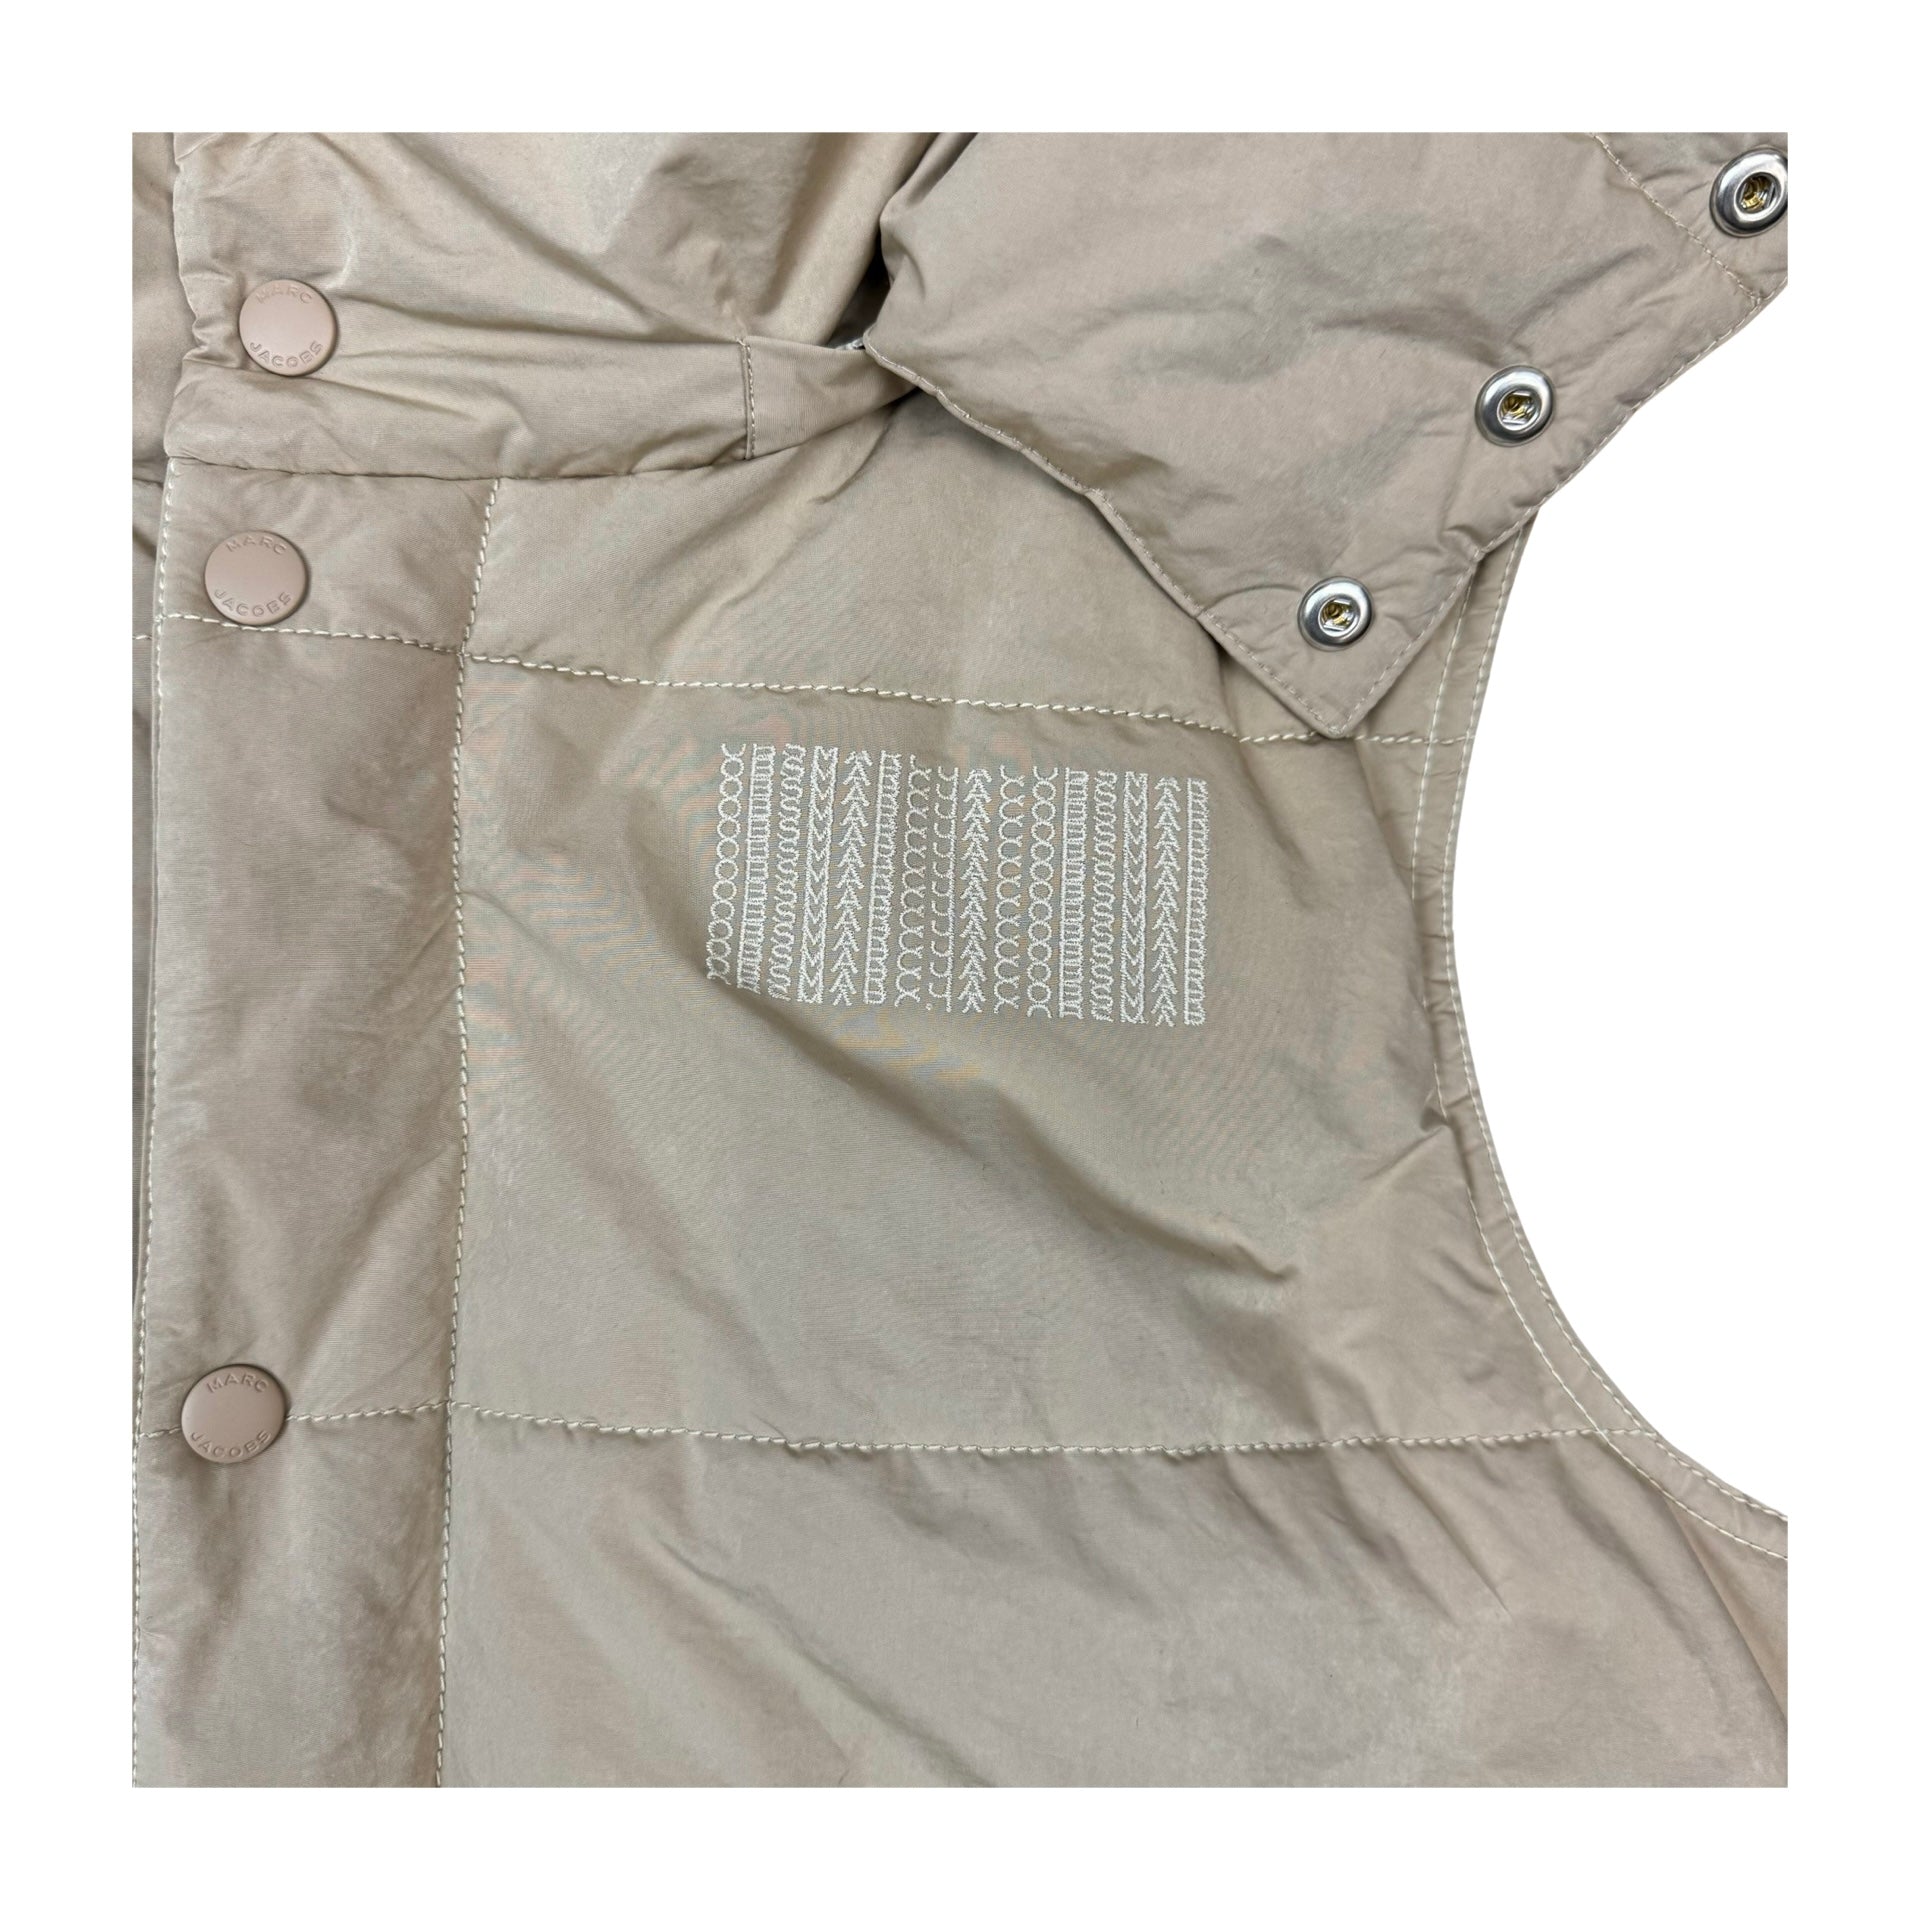 Marc Jacobs Oversized Puffer Vest